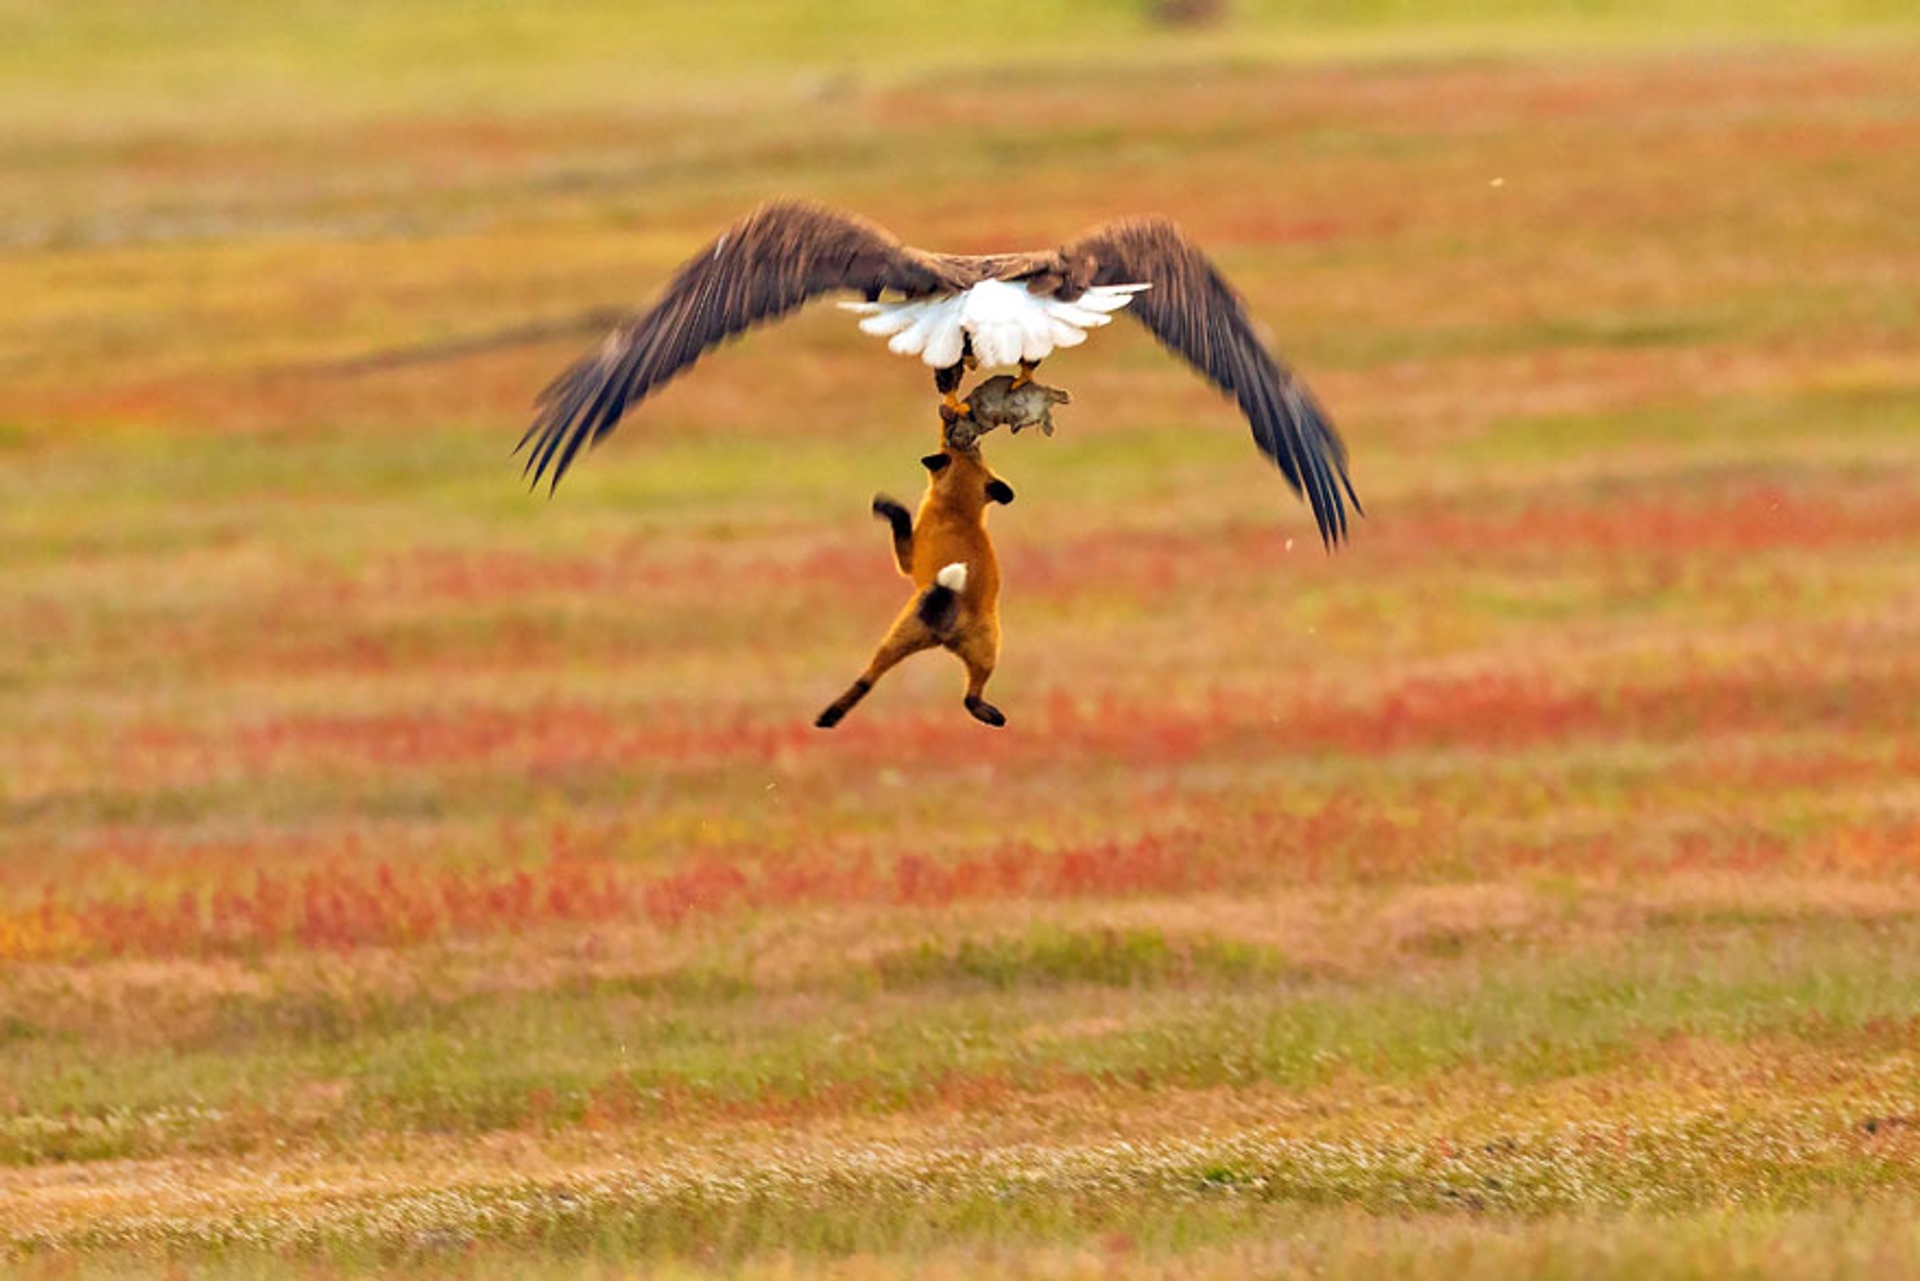 5b07de907de49-wildlife-photography-eagle-fox-fighting-over-rabbit-kevin-ebi-6-5b0661edc4434__880